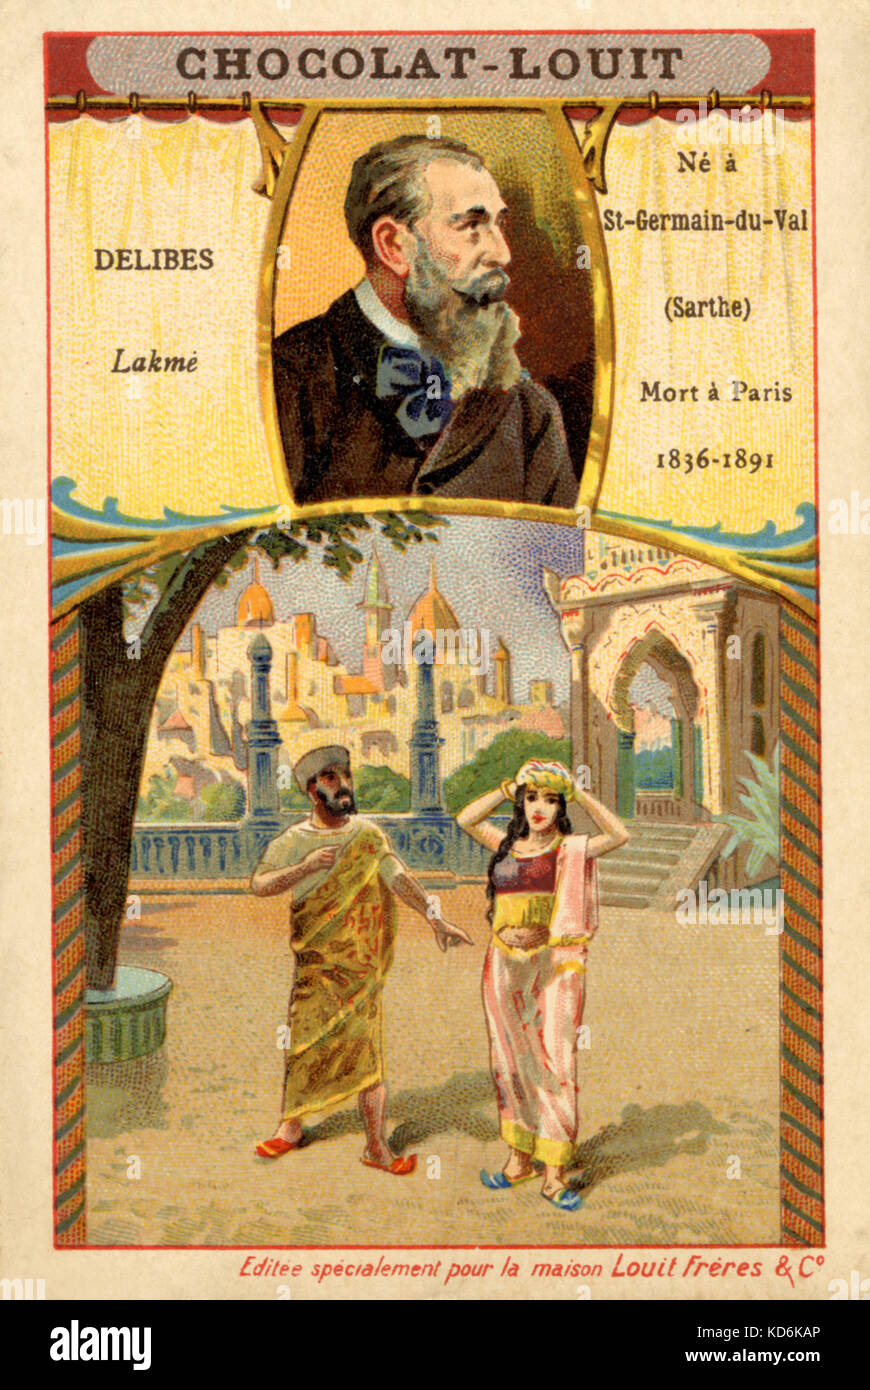 Lakmé scena di Léo Delibes' opera in prima assoluta per l'opéra comique in 1883. Il compositore francese, 1836-1891. Cartolina Chocolat-Louit. Cartolina Foto Stock